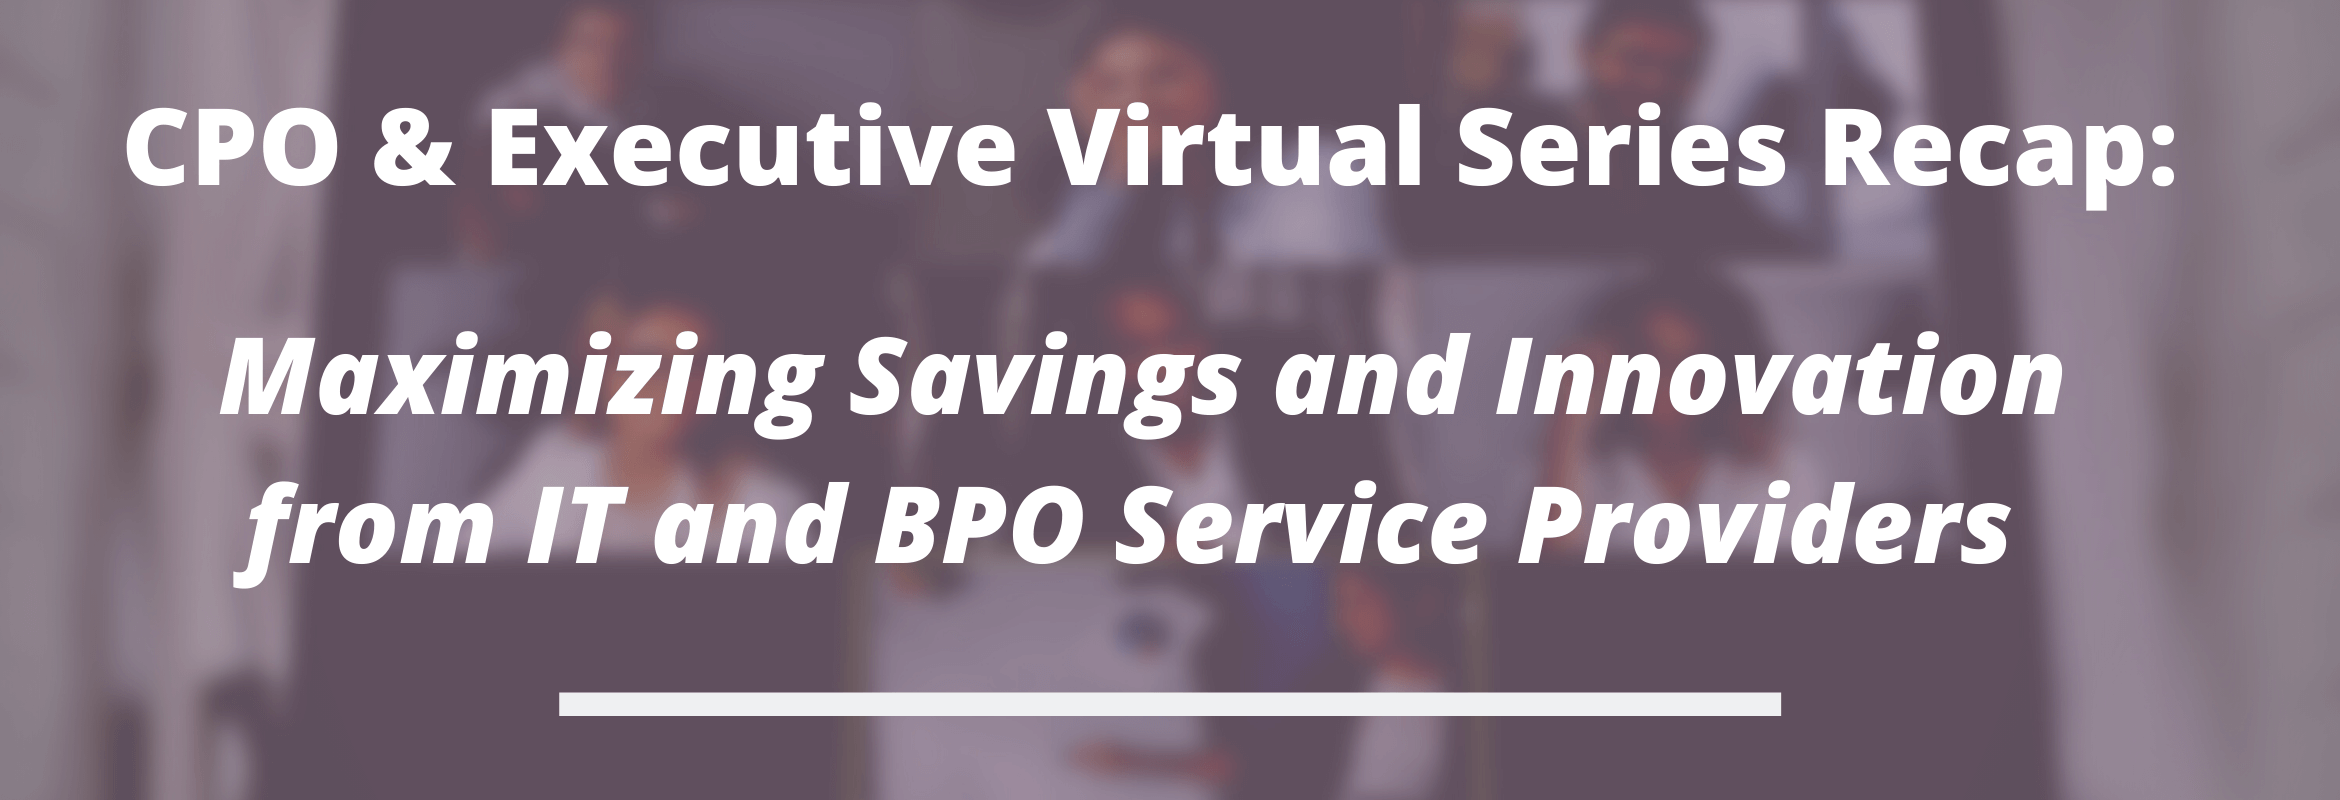 IT and BPO service providers